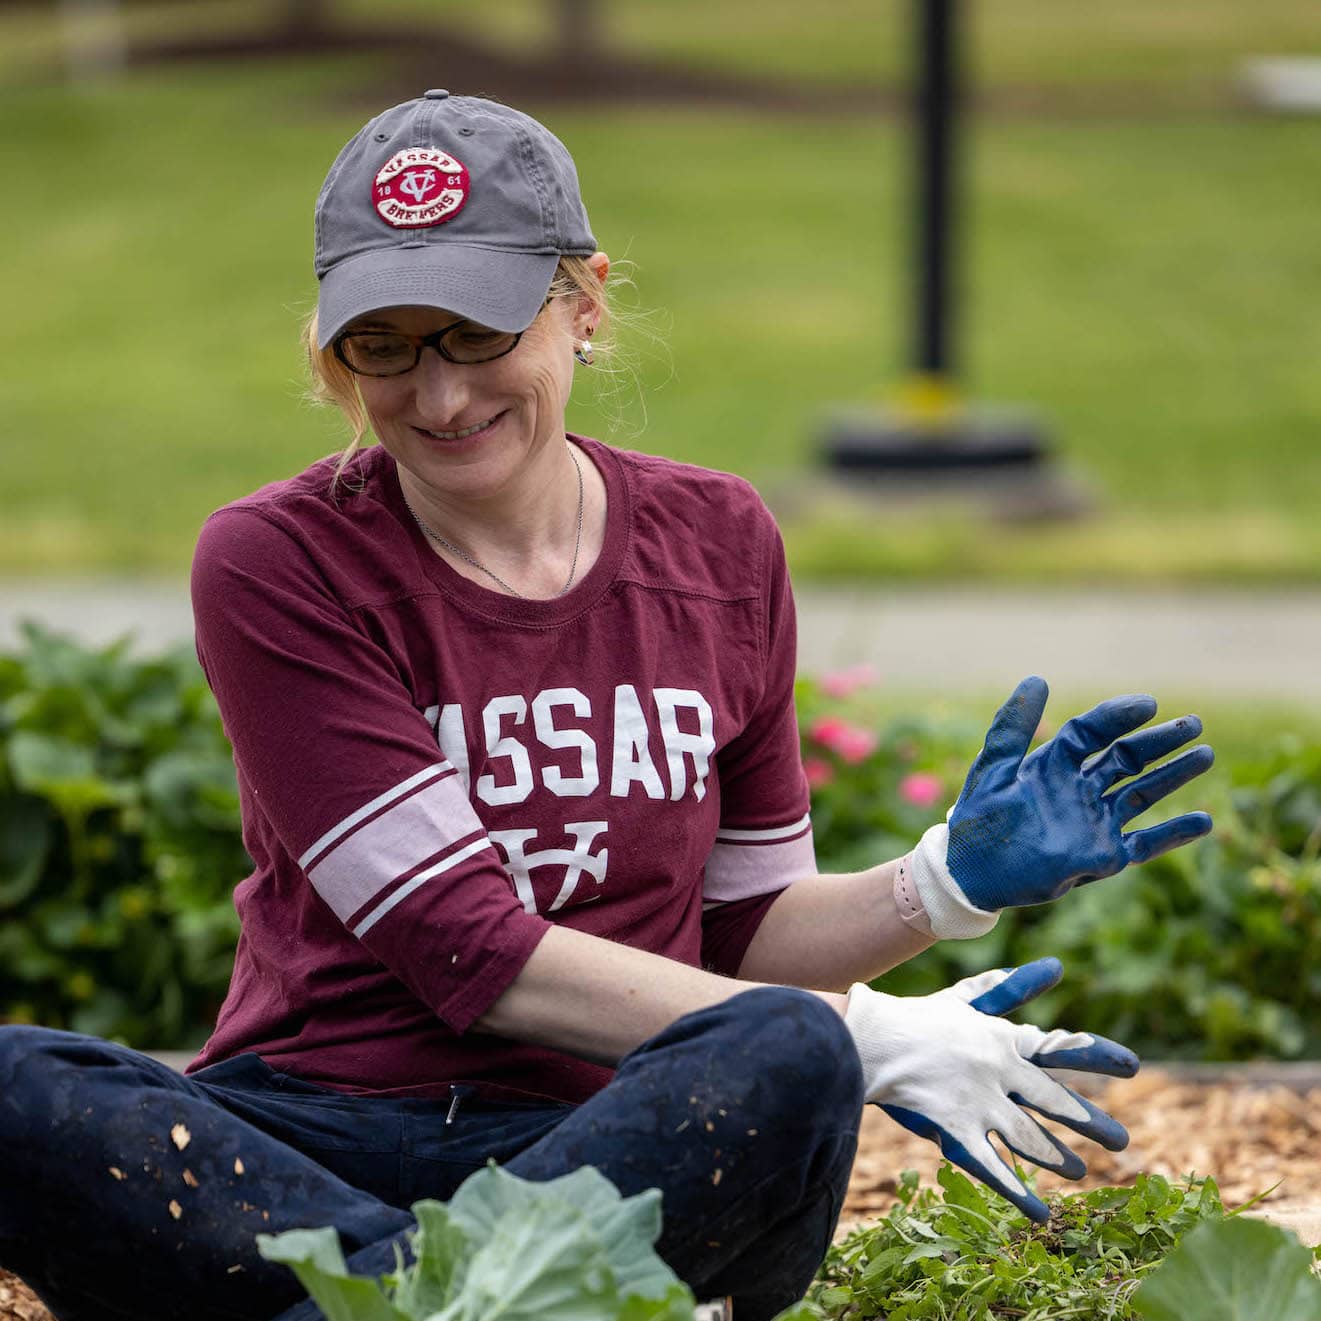 Volunteer in a Vassar Jersey planting flowers